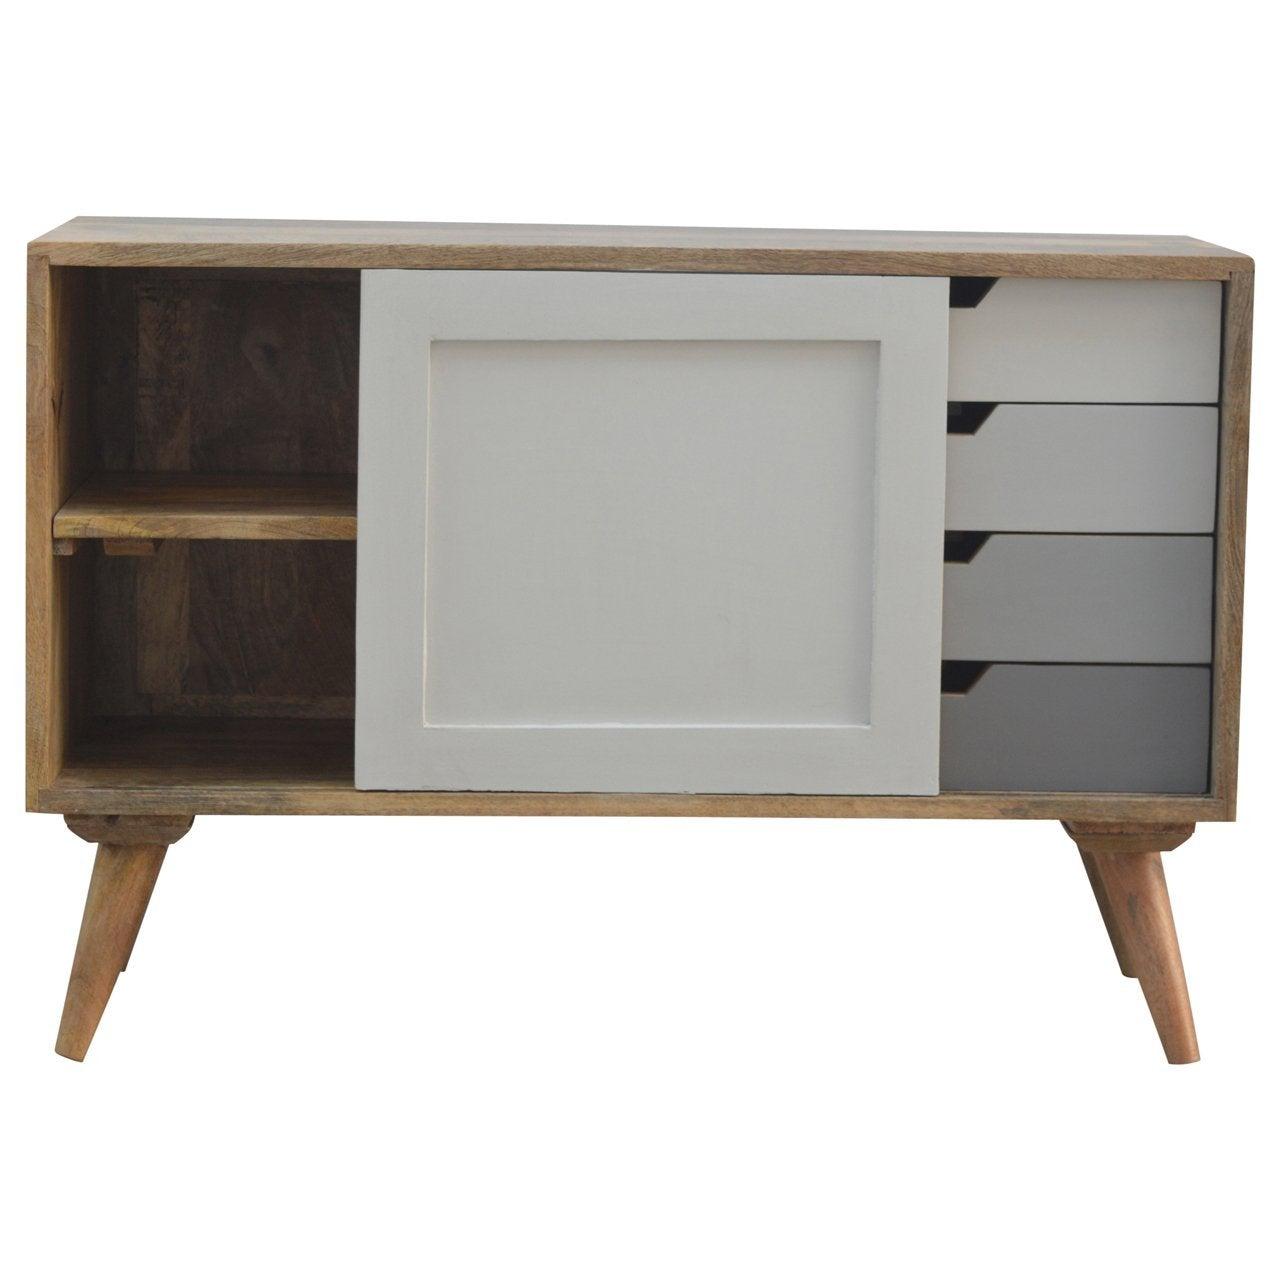 Nordic sliding cabinet with 4 drawers - crimblefest furniture - image 6